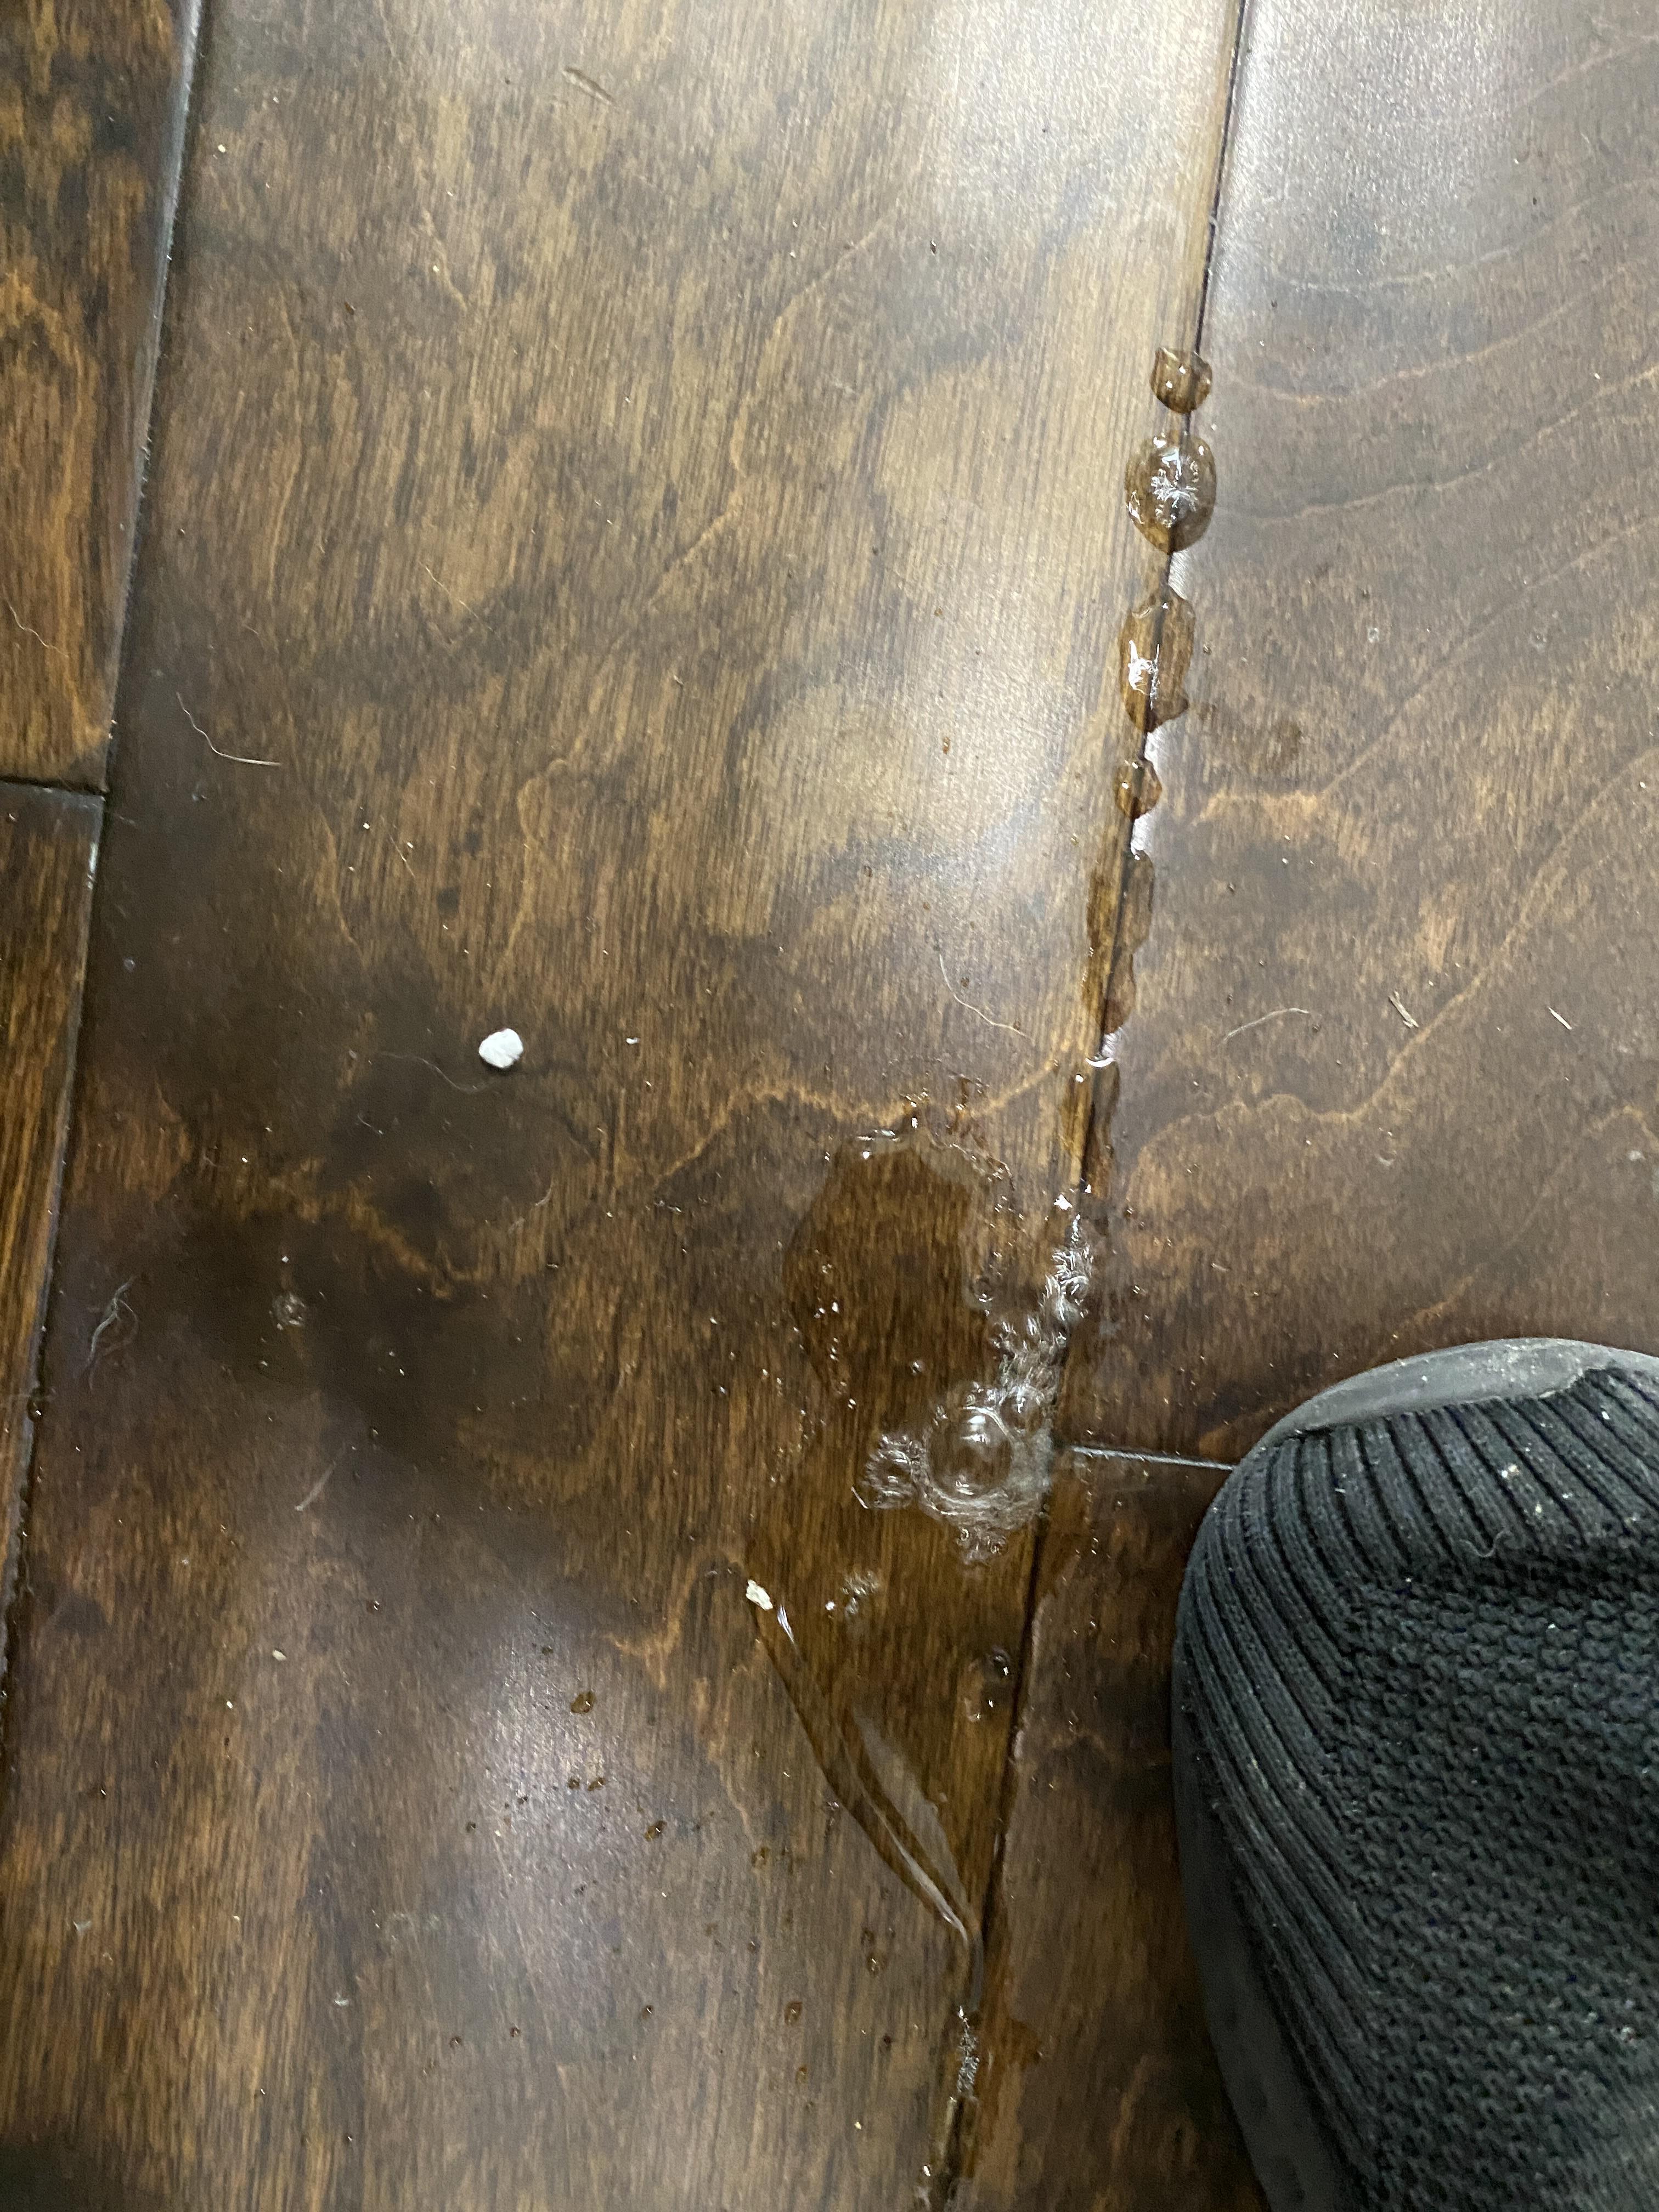 Water Seeping Through Wood floor Plaquemine